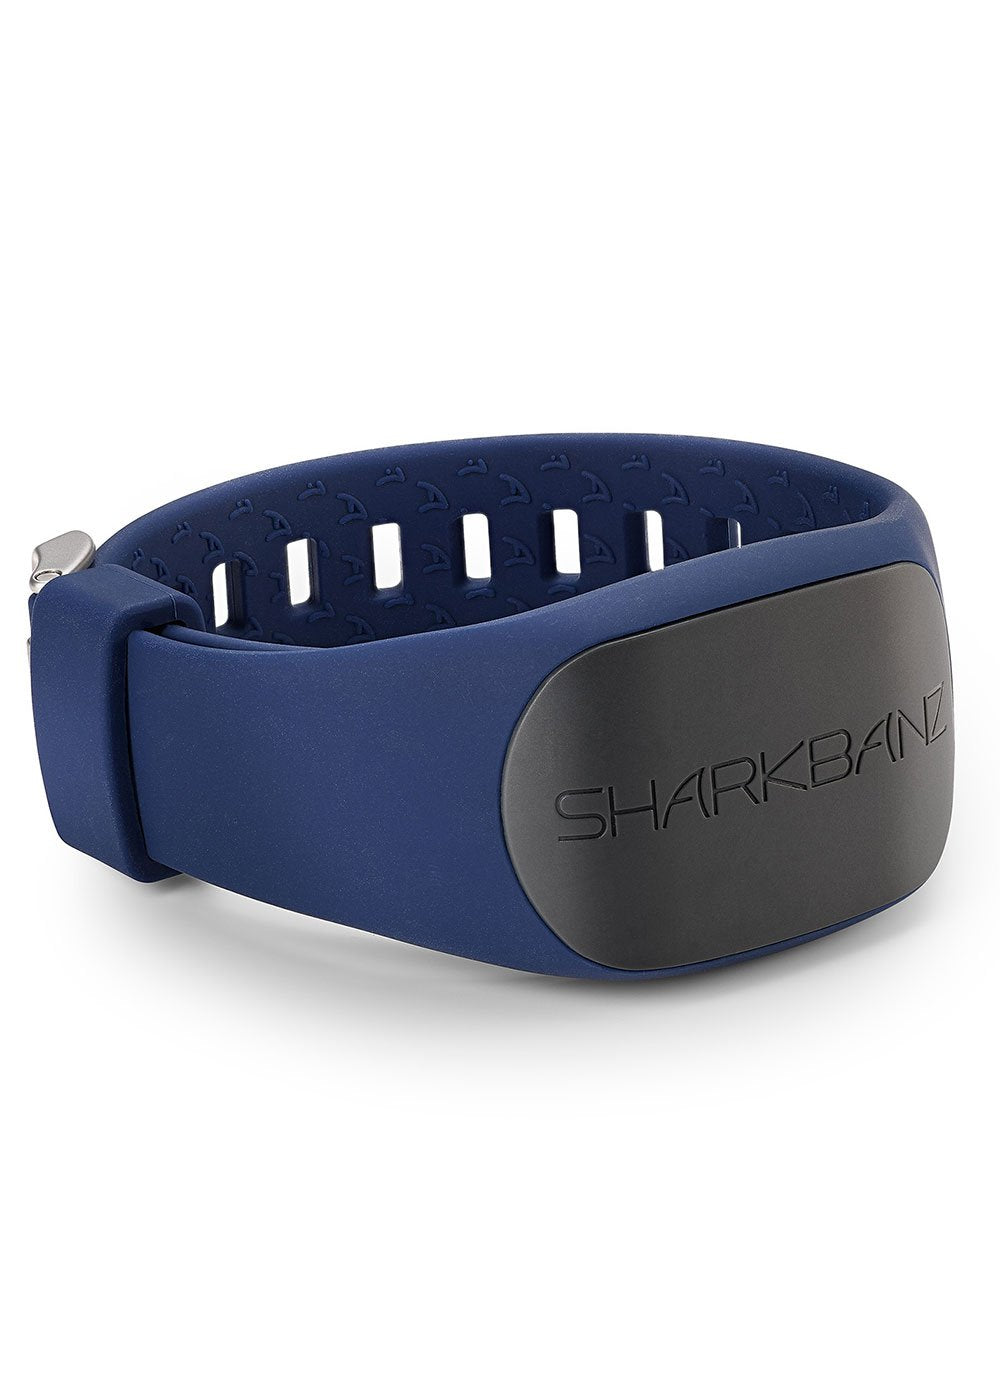 Sharkbanz 2.0 Shark Deterrent Band - Marine/Slate - Buy online with Adreno Spearfishing